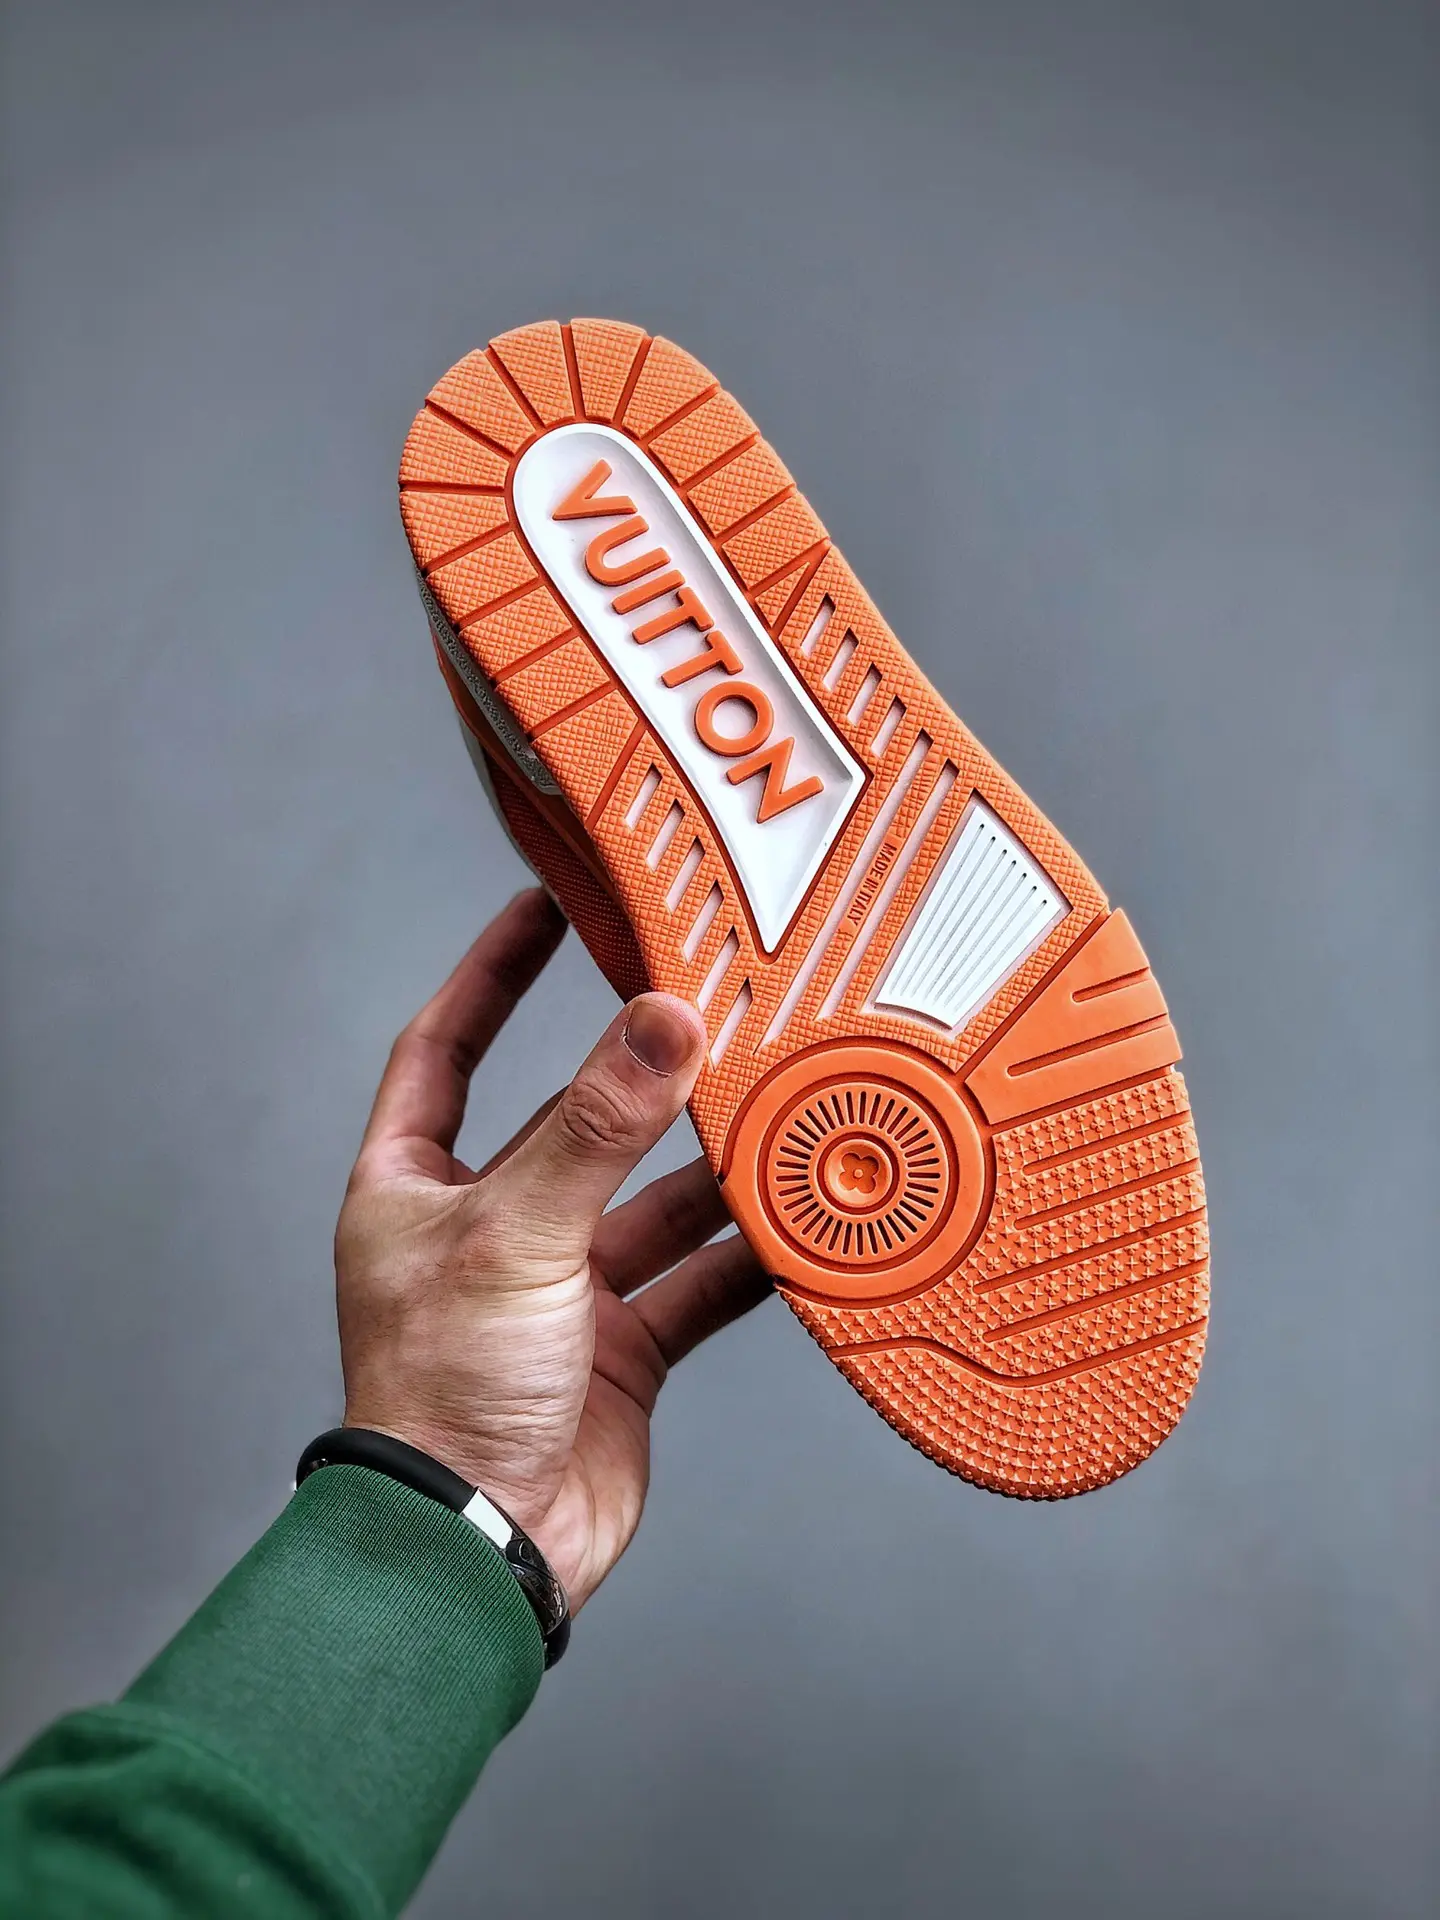 Louis Vuitton LV Trainer #54 Signature Orange White Sneakers Review | YtaYta